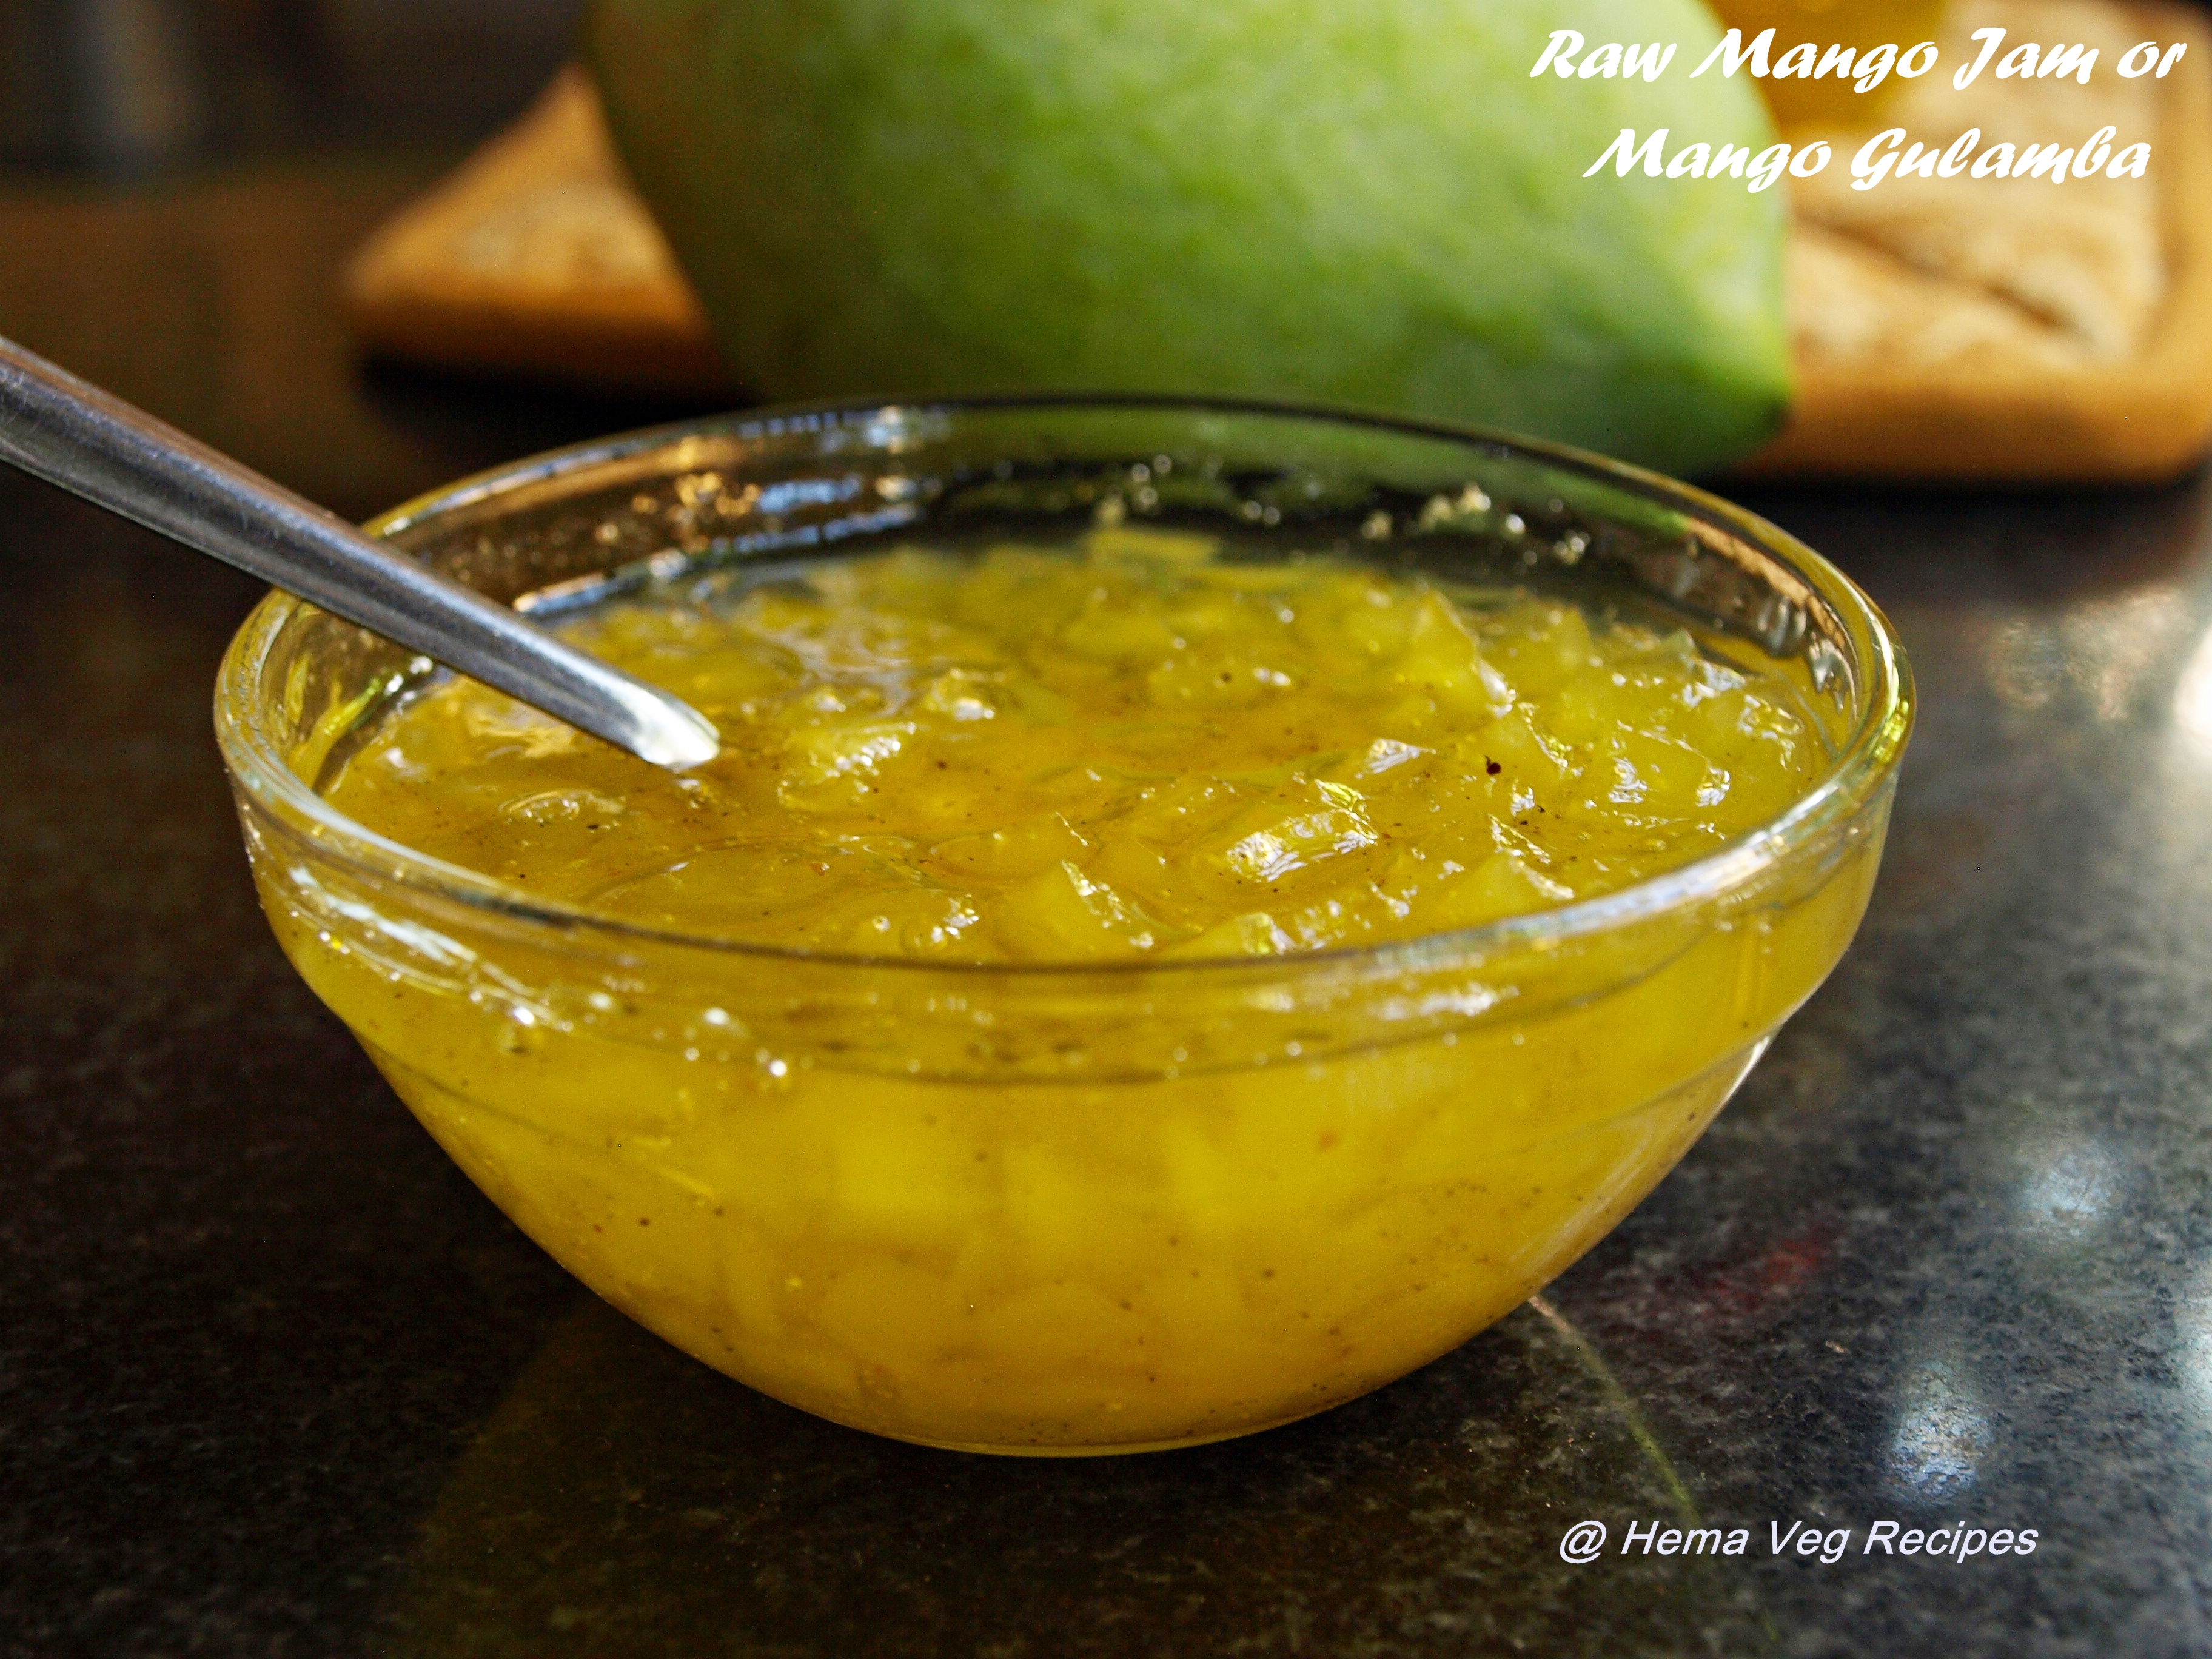 Raw Mango Jam or Mango Gulamba